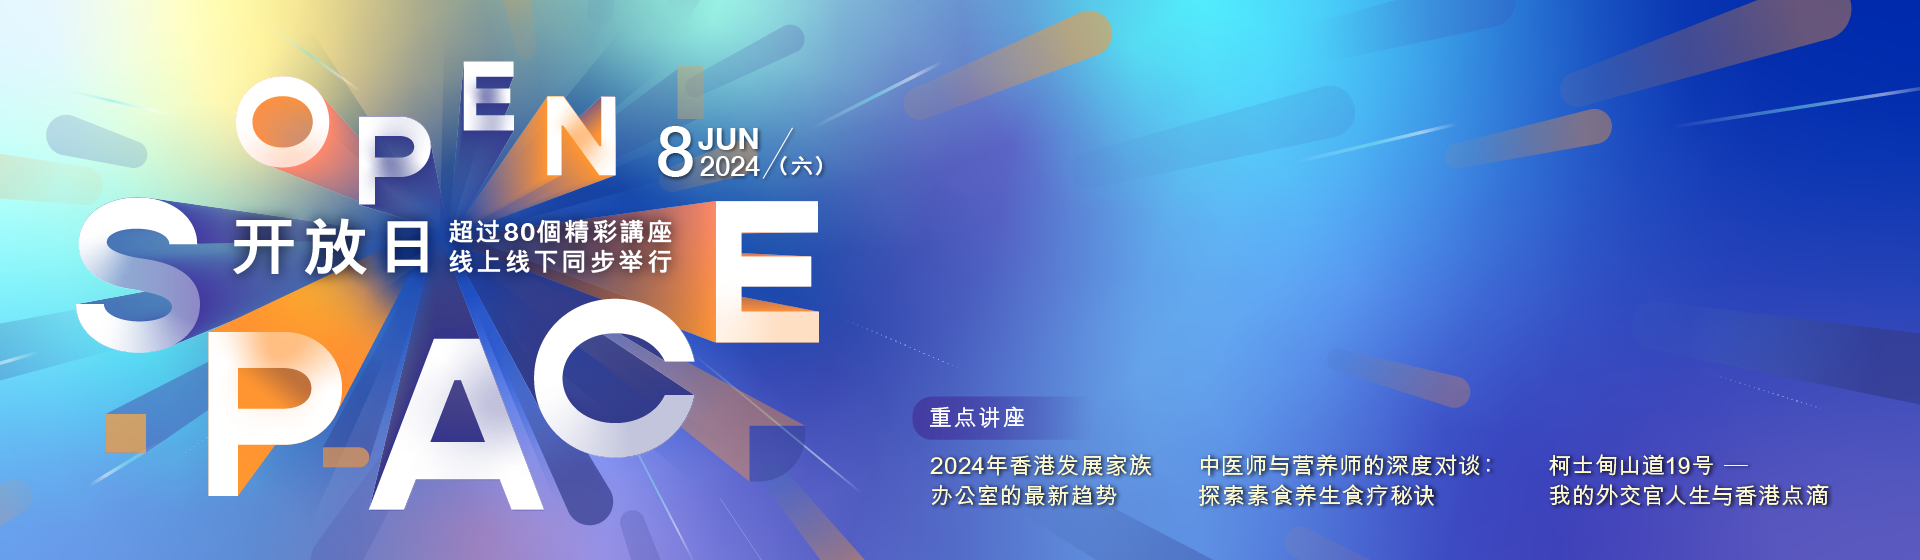 HKU SPACE OPEN SPACE 开放日 六月八日 星期六 超过80个精彩讲座线上线下同步举行